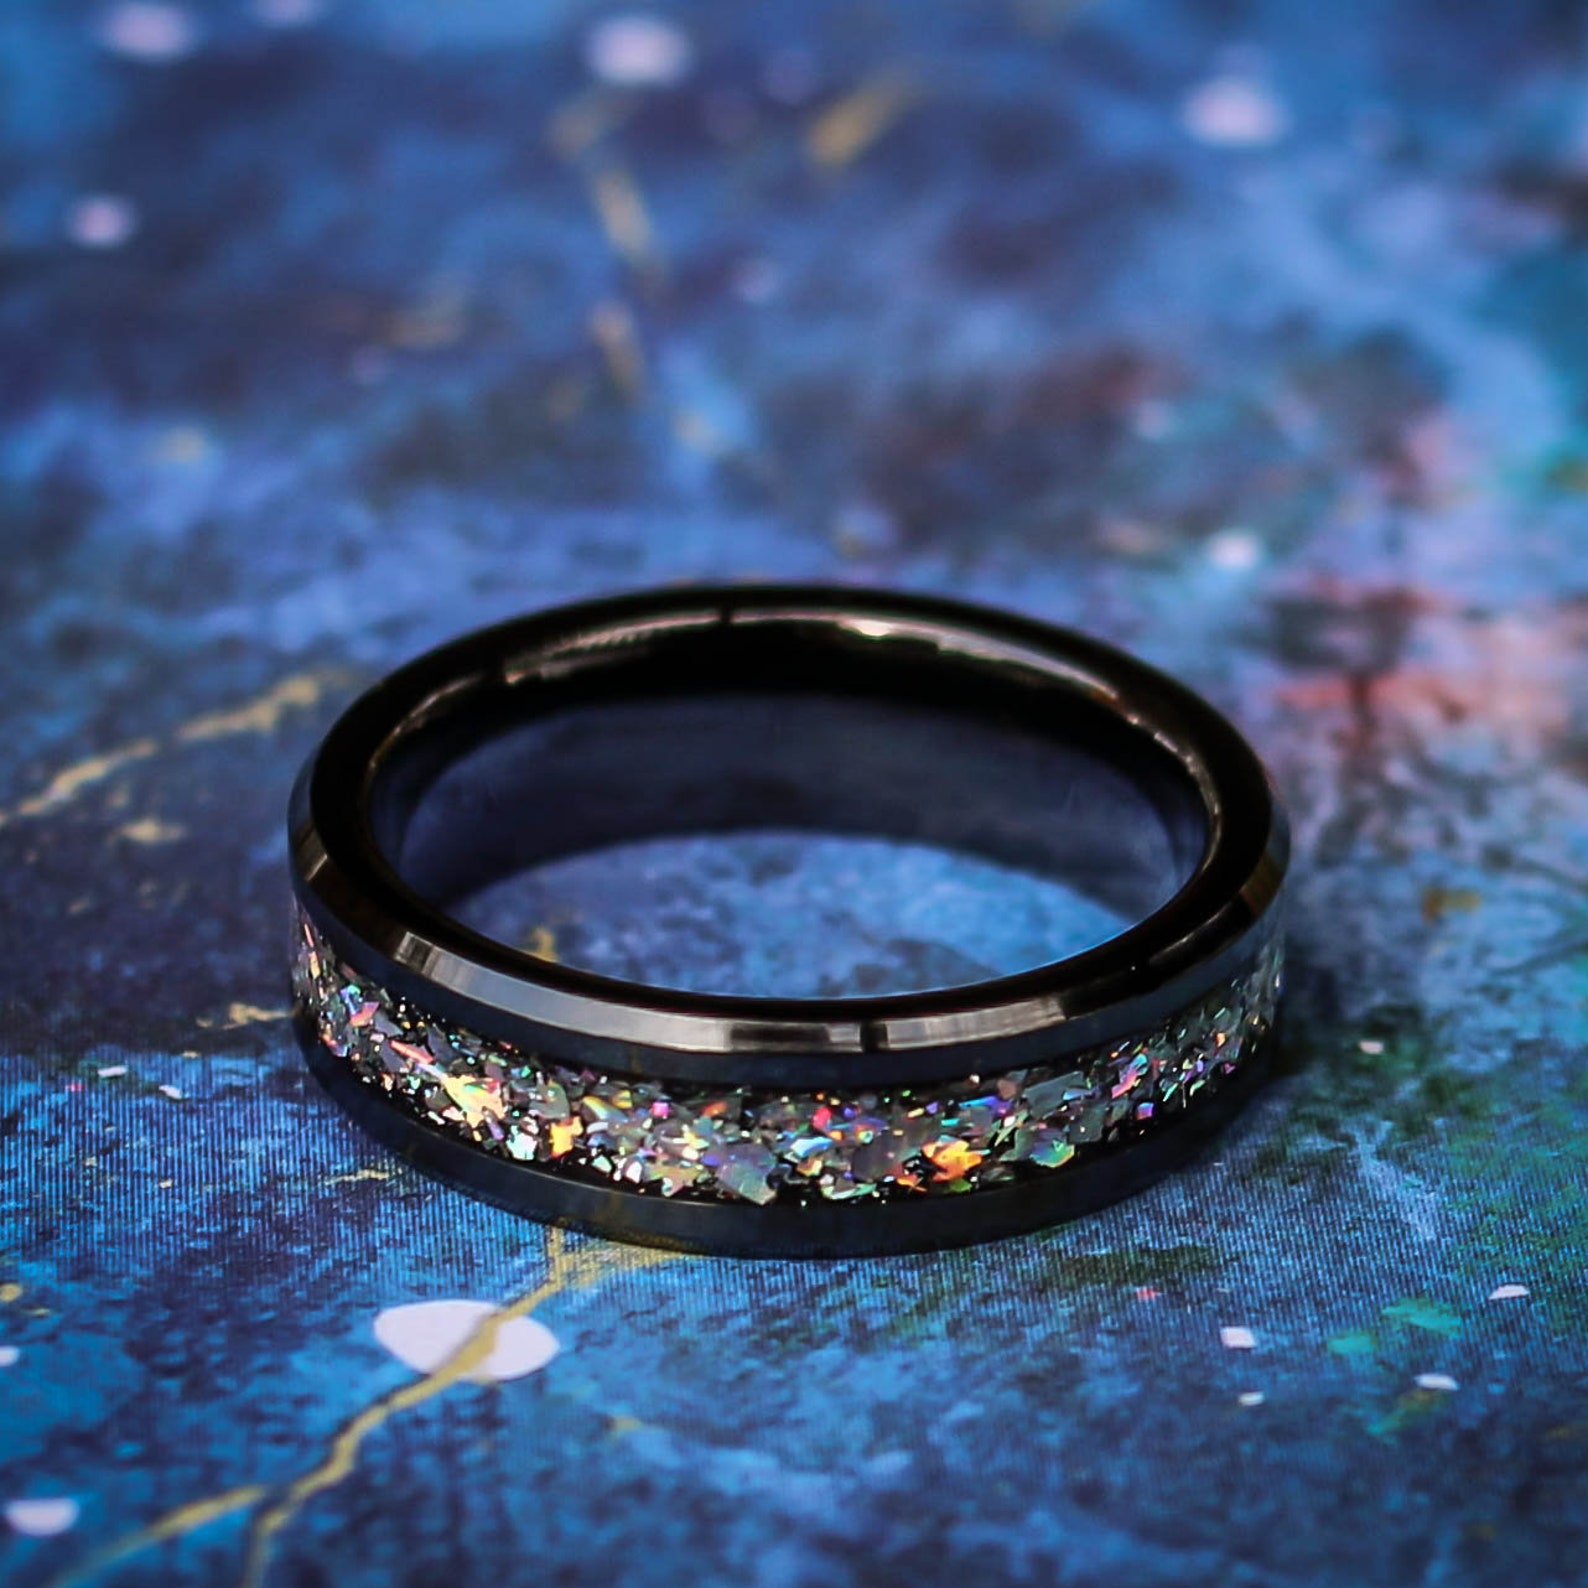 Holographic Resin Ceramic Ring Wedding Ring Narrow Ring 6mm Etsy